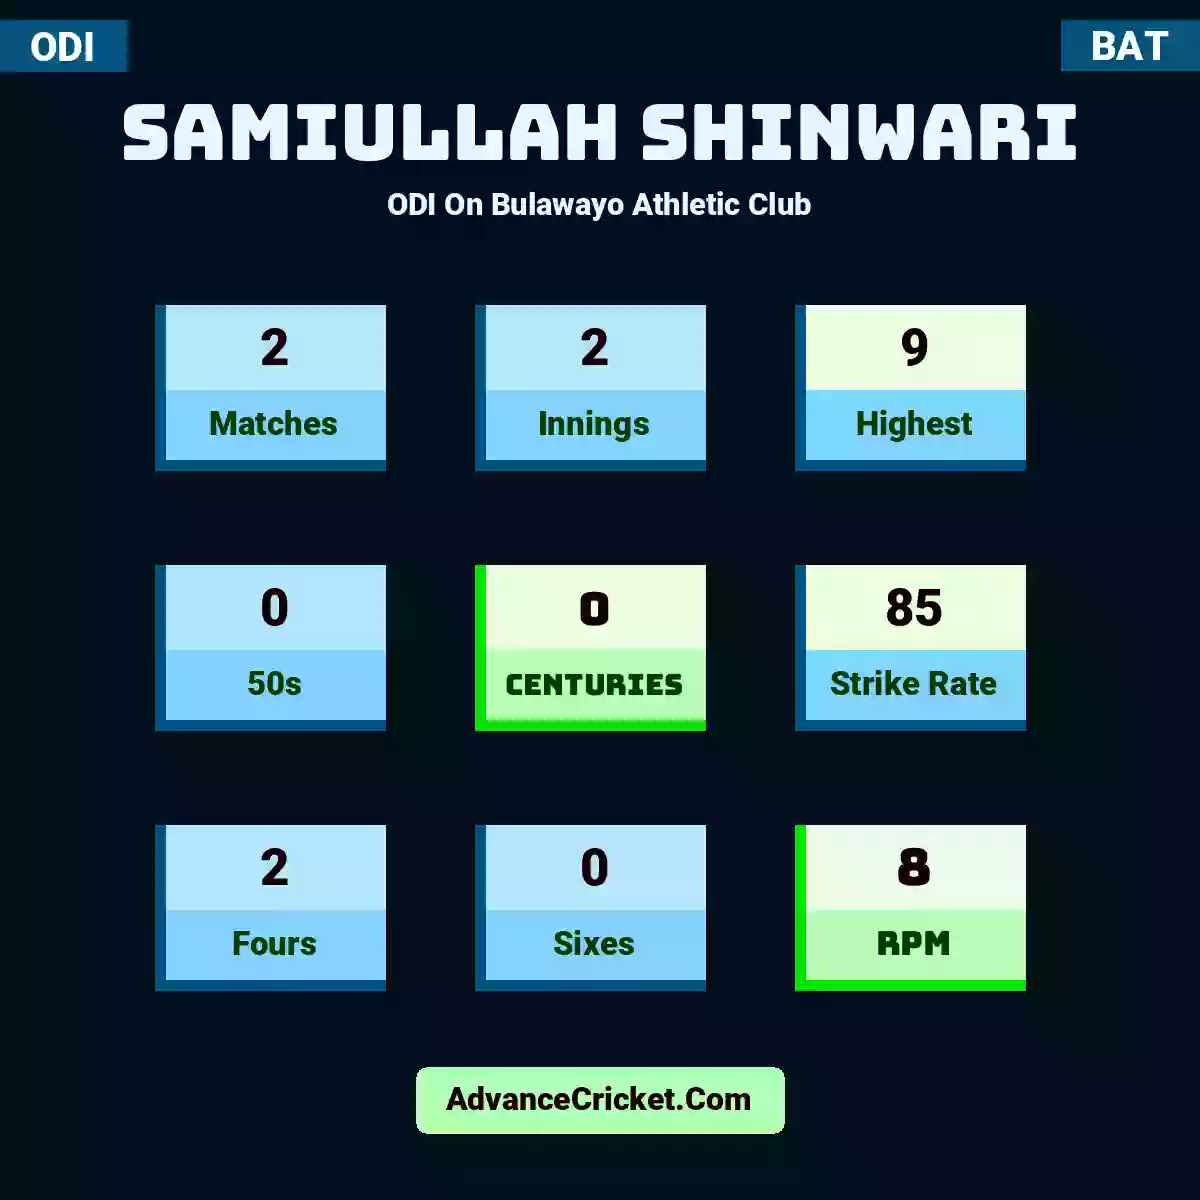 Samiullah Shinwari ODI  On Bulawayo Athletic Club, Samiullah Shinwari played 2 matches, scored 9 runs as highest, 0 half-centuries, and 0 centuries, with a strike rate of 85. S.Shinwari hit 2 fours and 0 sixes, with an RPM of 8.